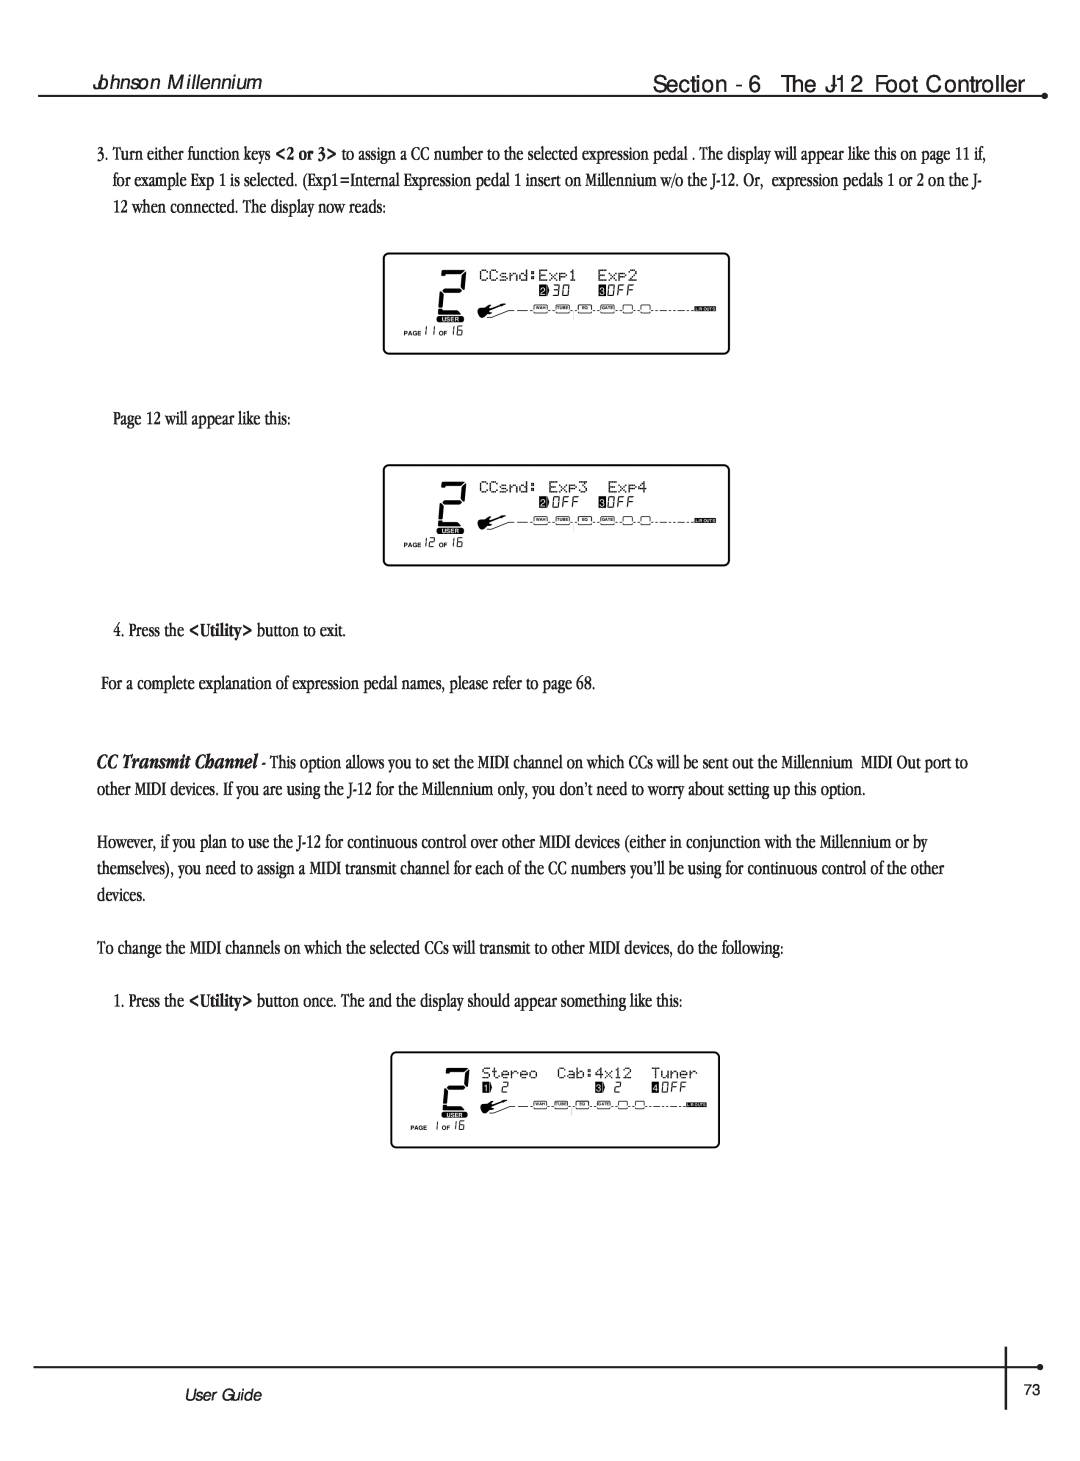 Millennium Enterprises Integrated Modeling Amplifier manual The J-12Foot Controller, User Guide, Johnson Millennium 